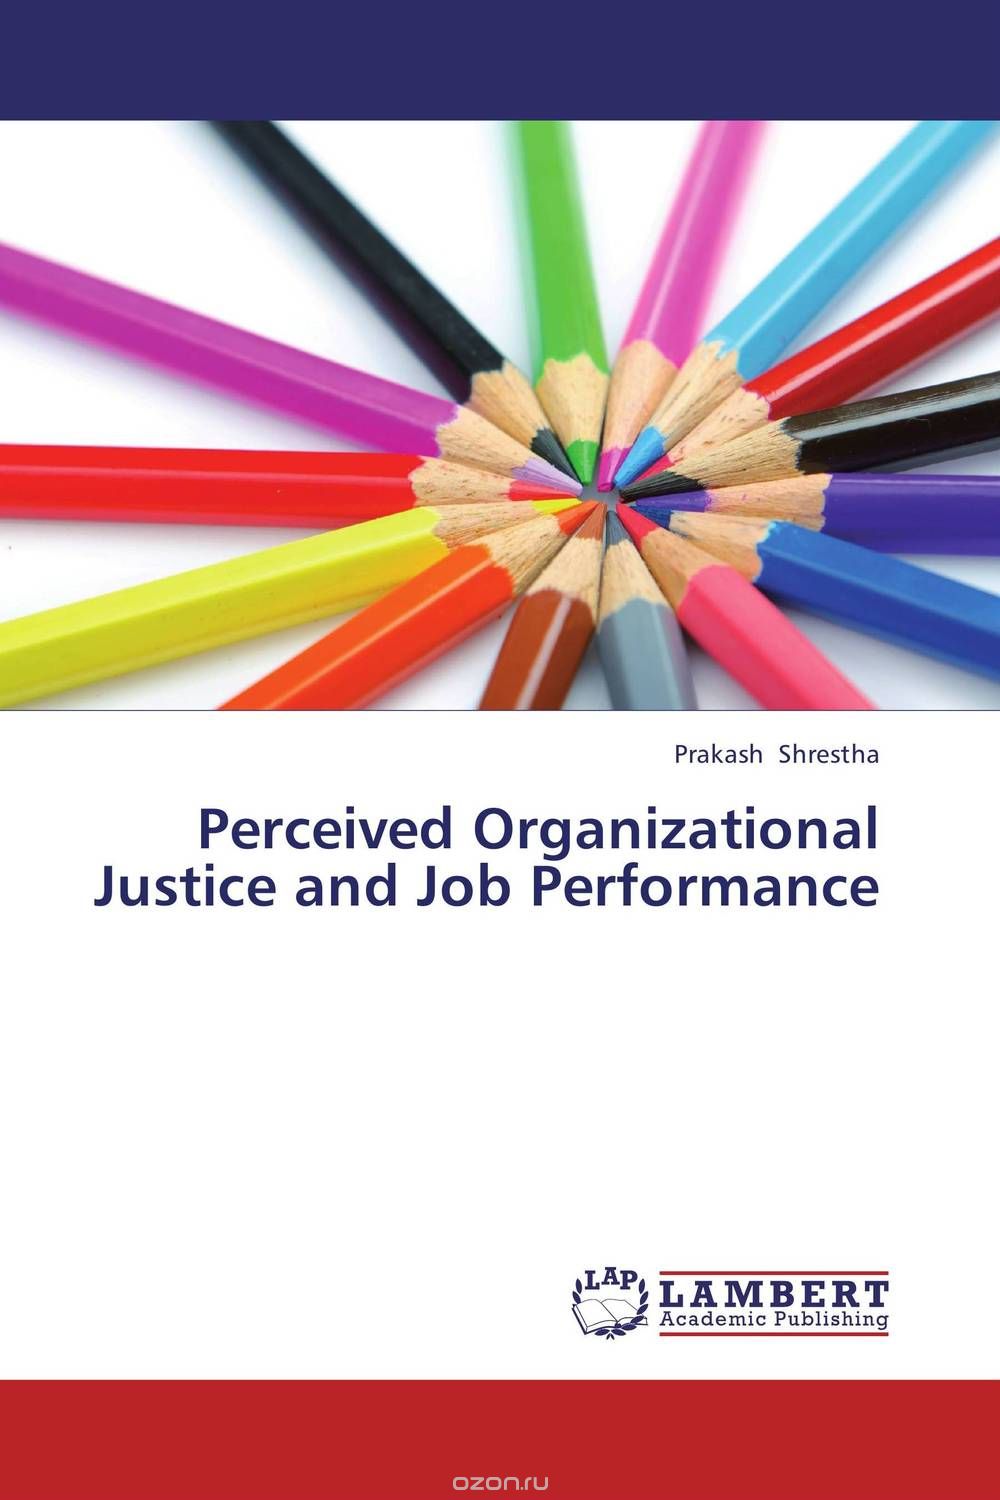 Скачать книгу "Perceived Organizational Justice and Job Performance"